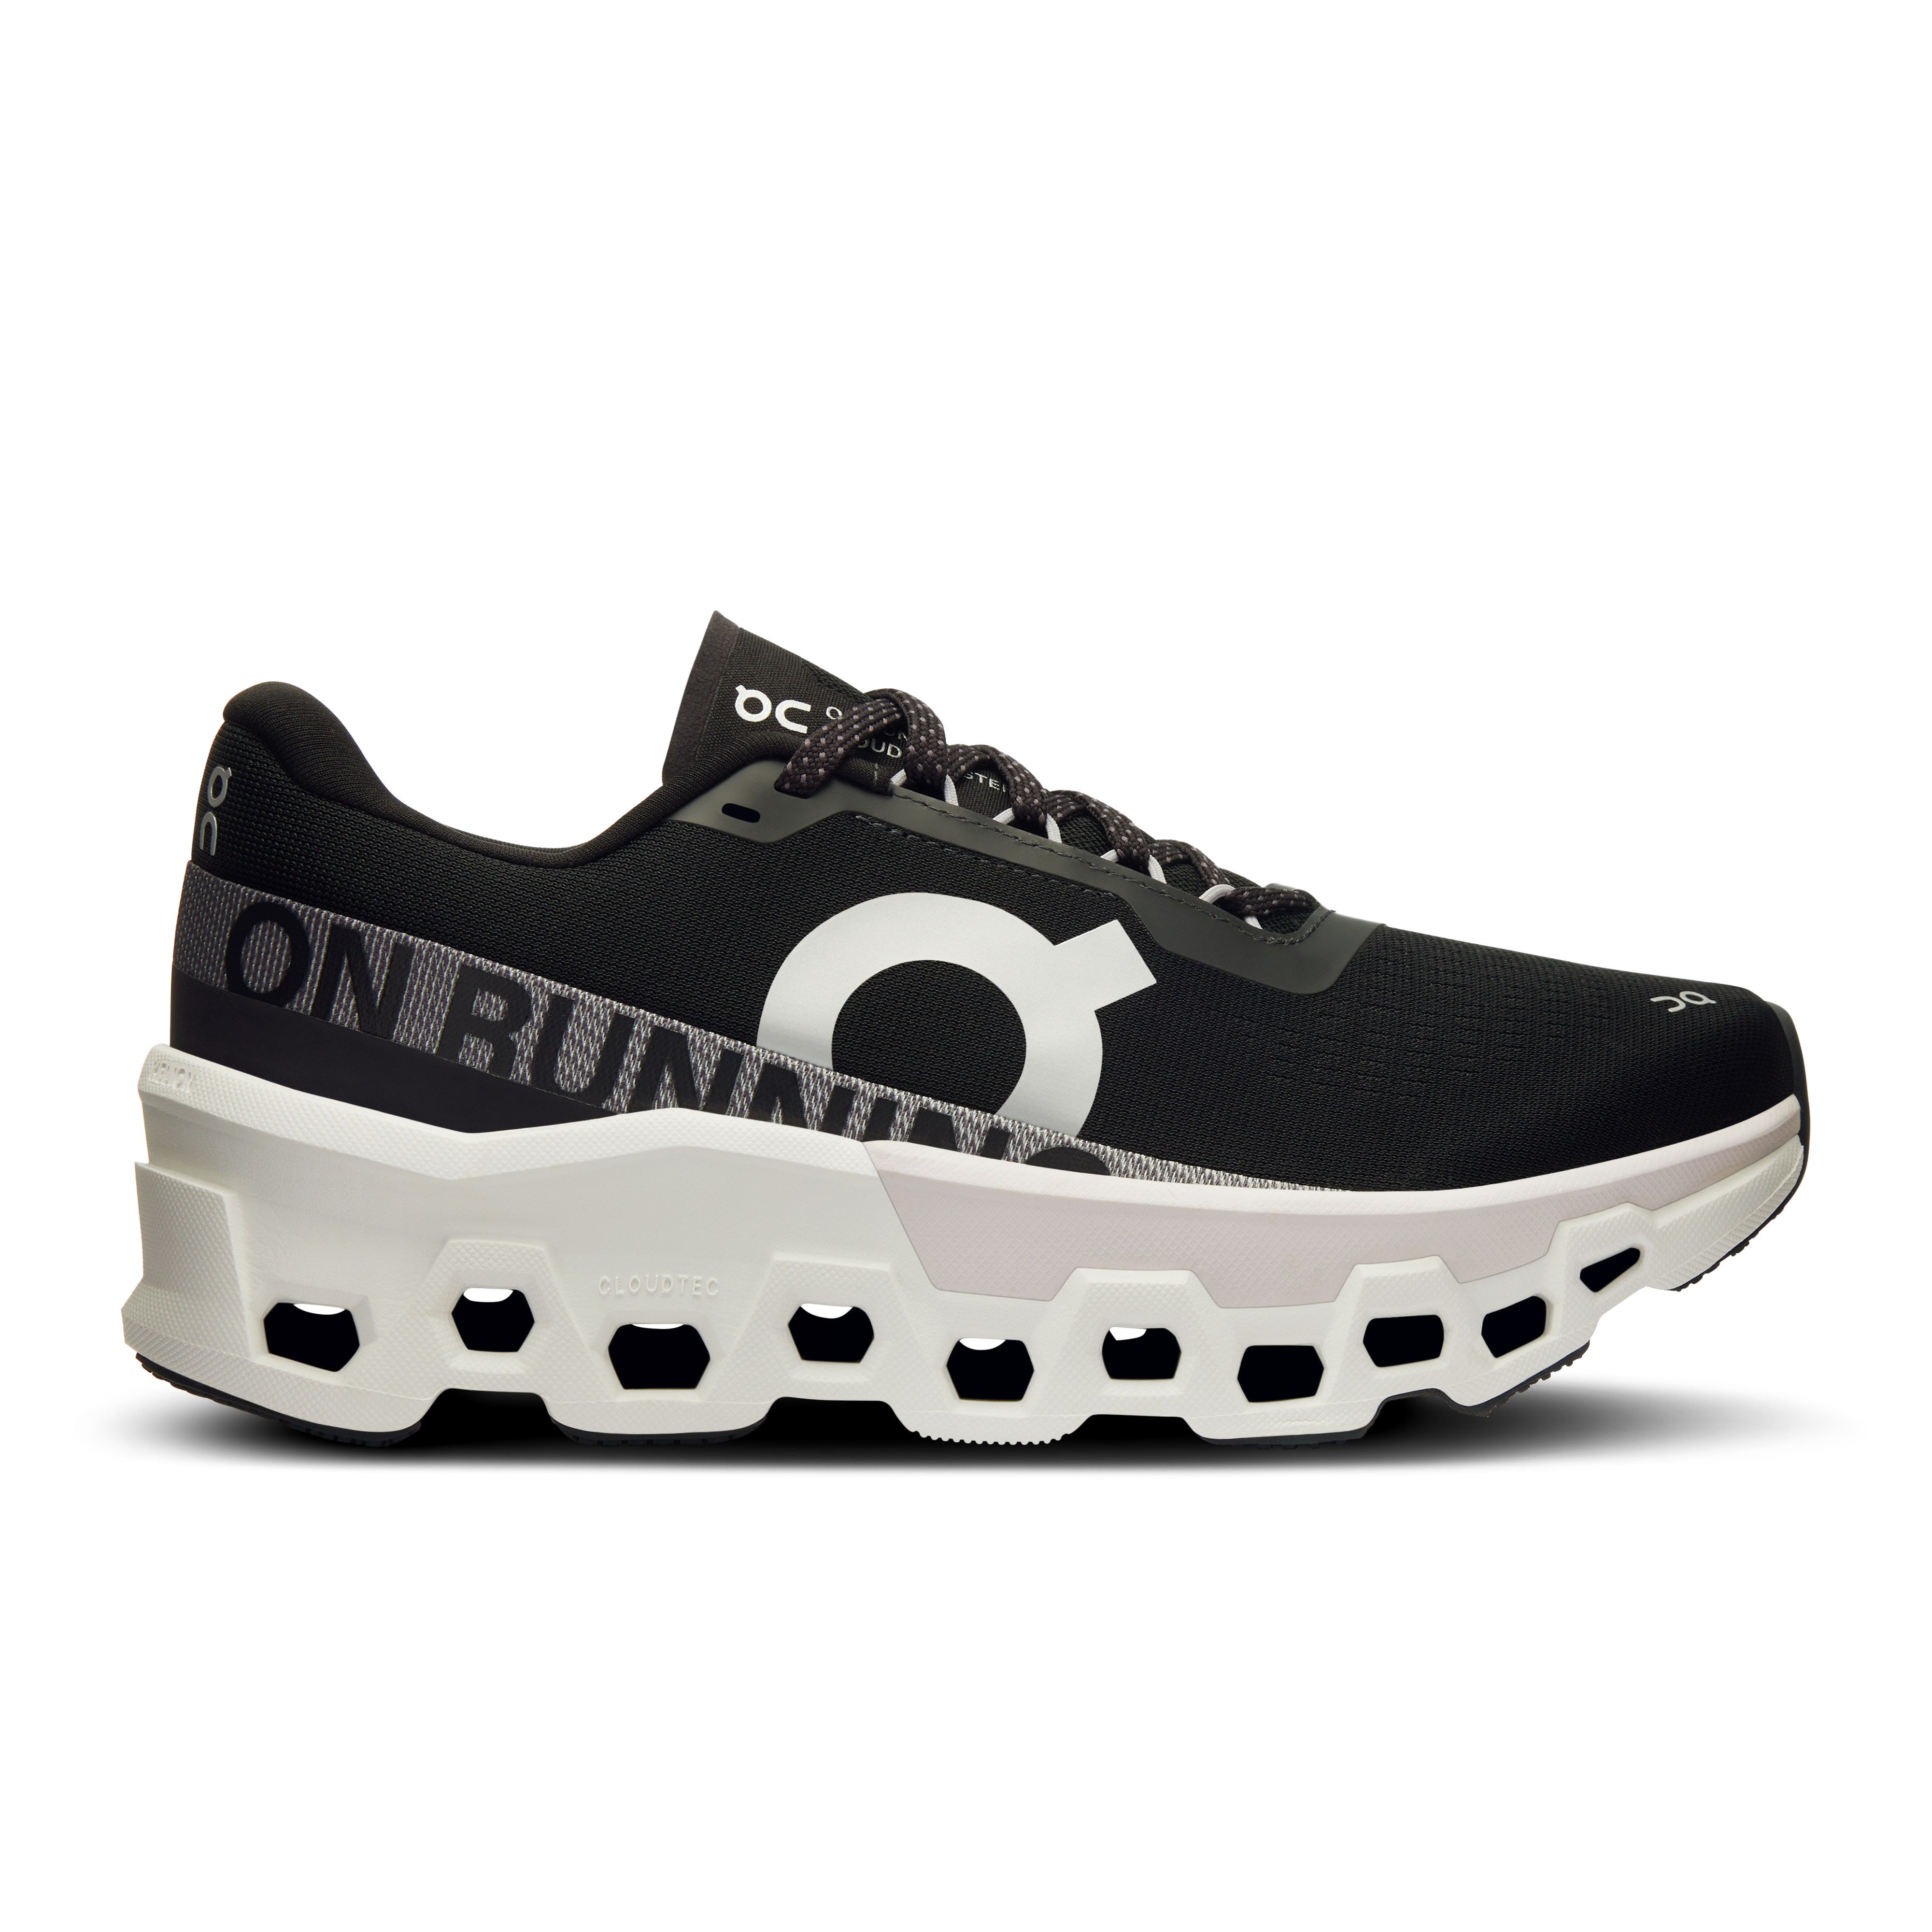 ON Men's Cloudmonster 2 Footwear ON Black/White 11.5 